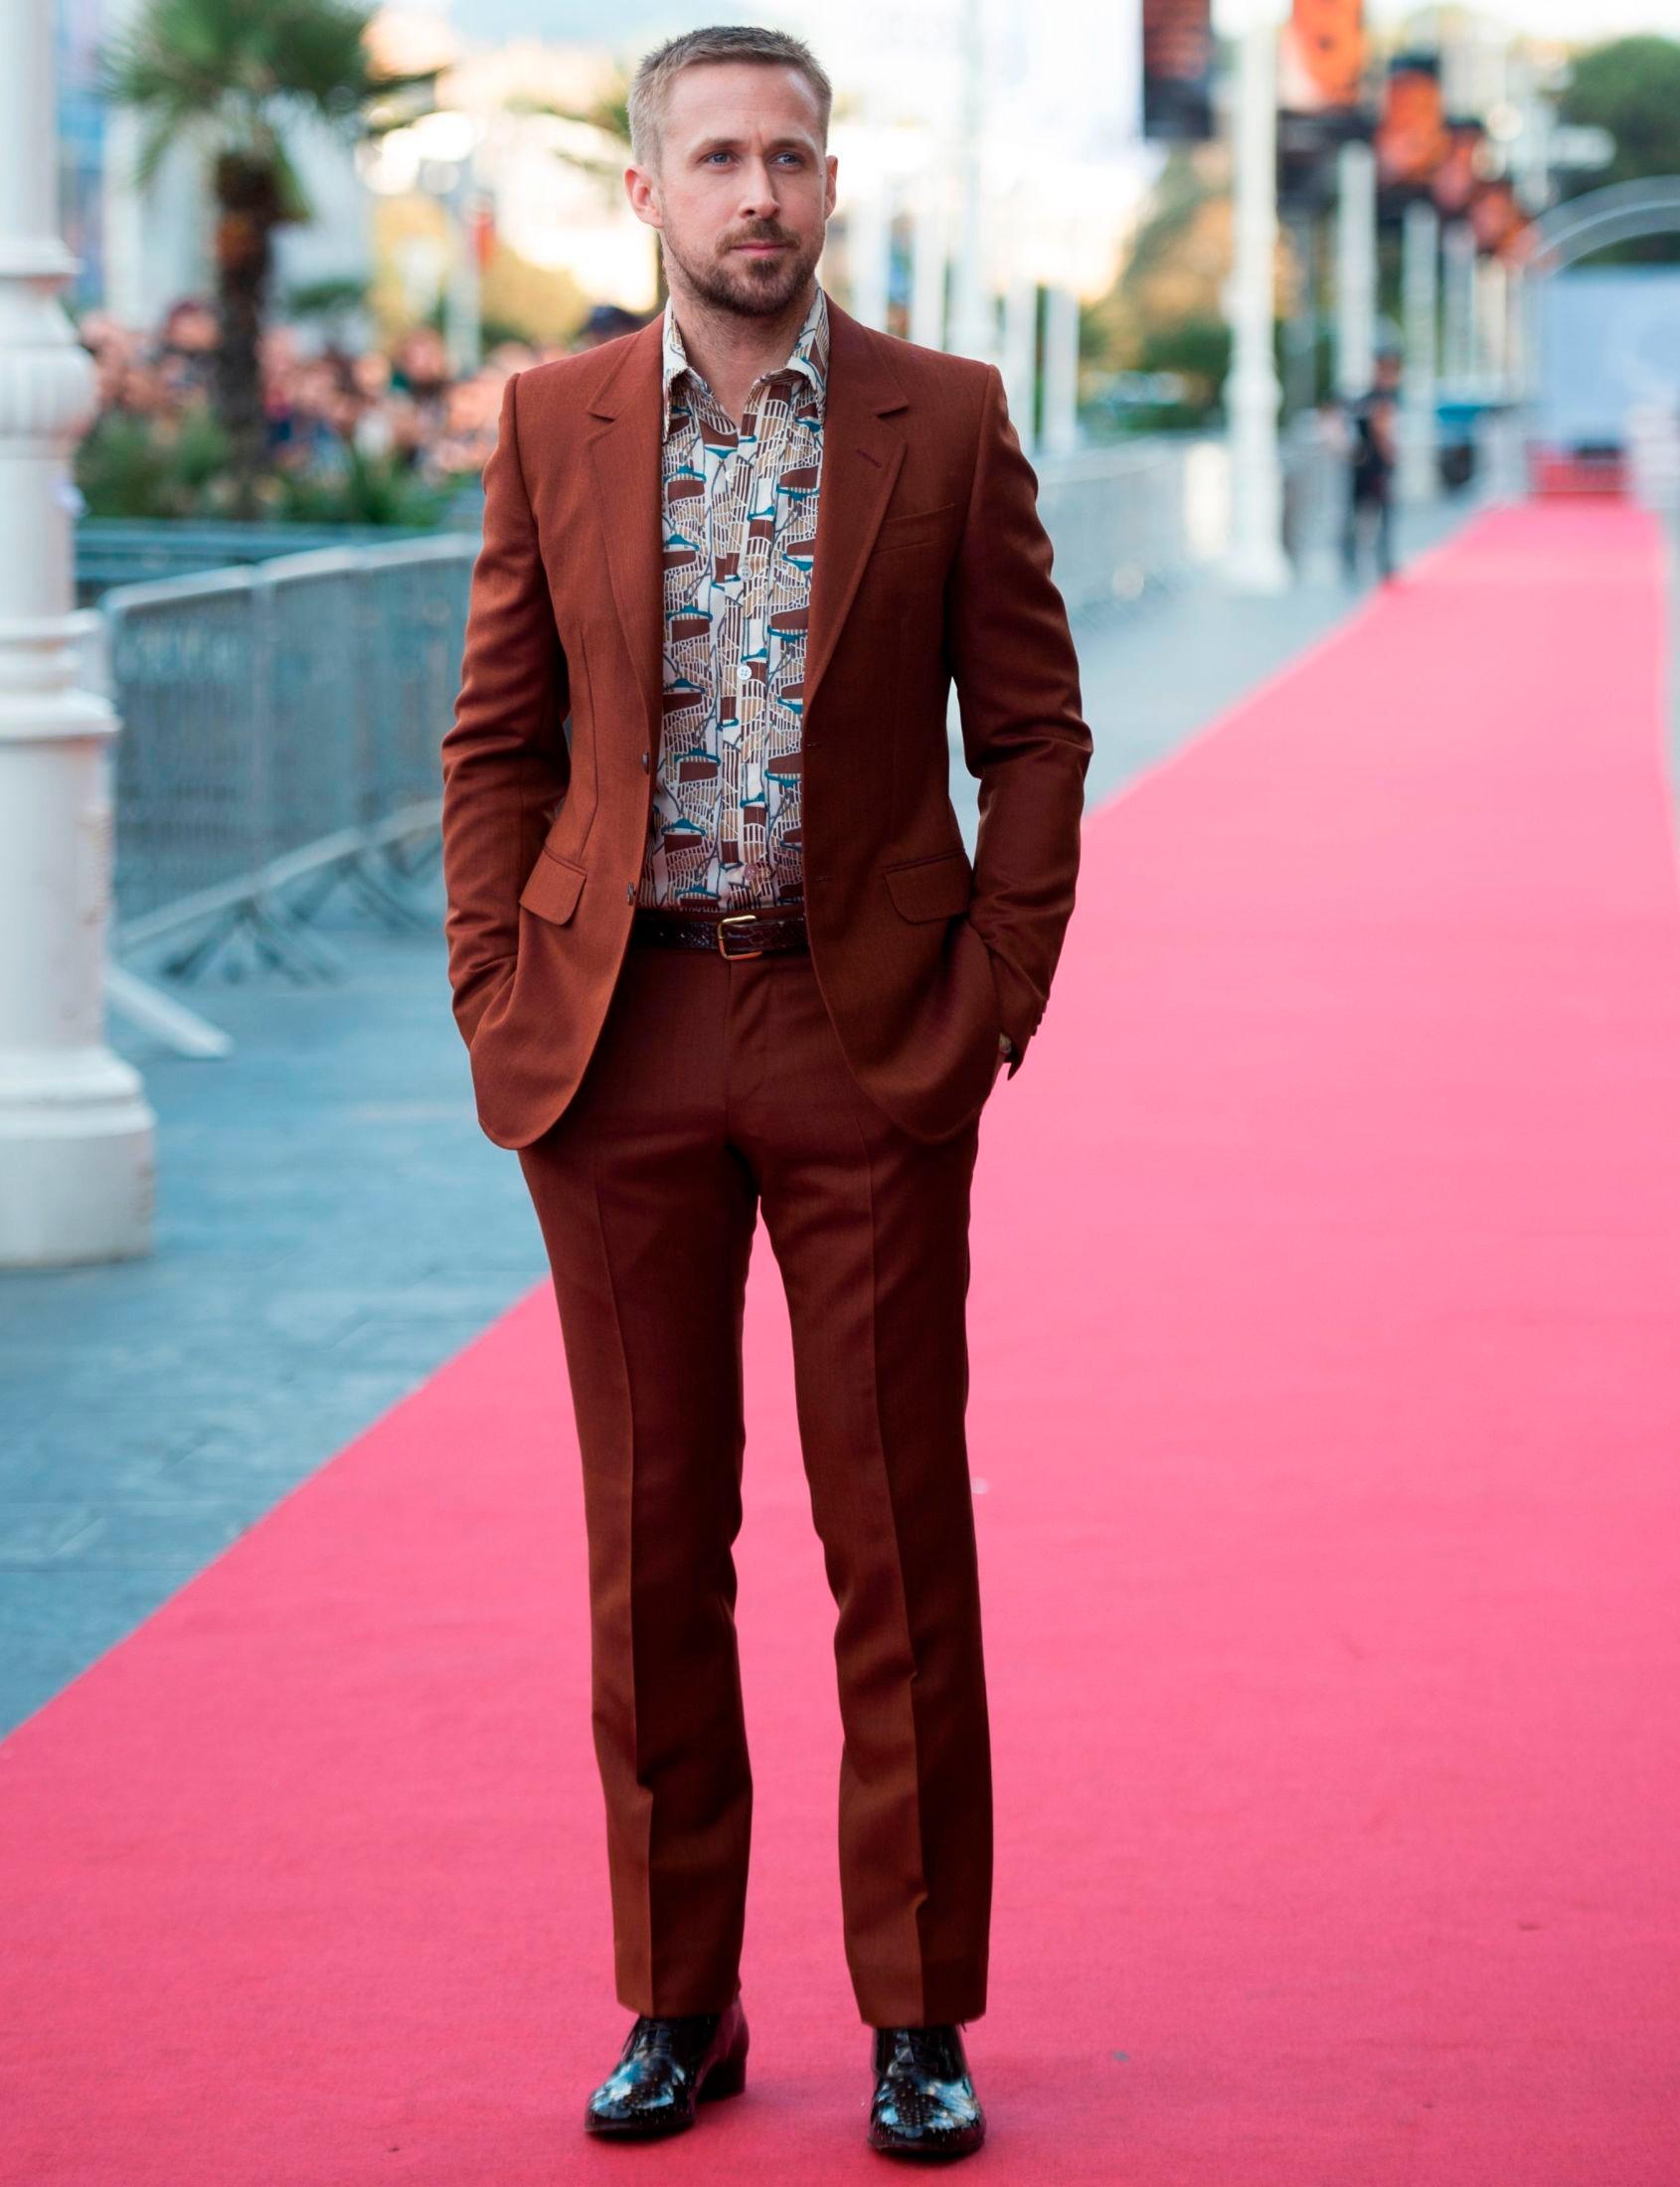 RETRO: Ryan Gosling i rødbrunt og blått under filmfestivalen i San Sebastian 2019. Foto: Ander Gillenea, AFP / NTB Scanpix